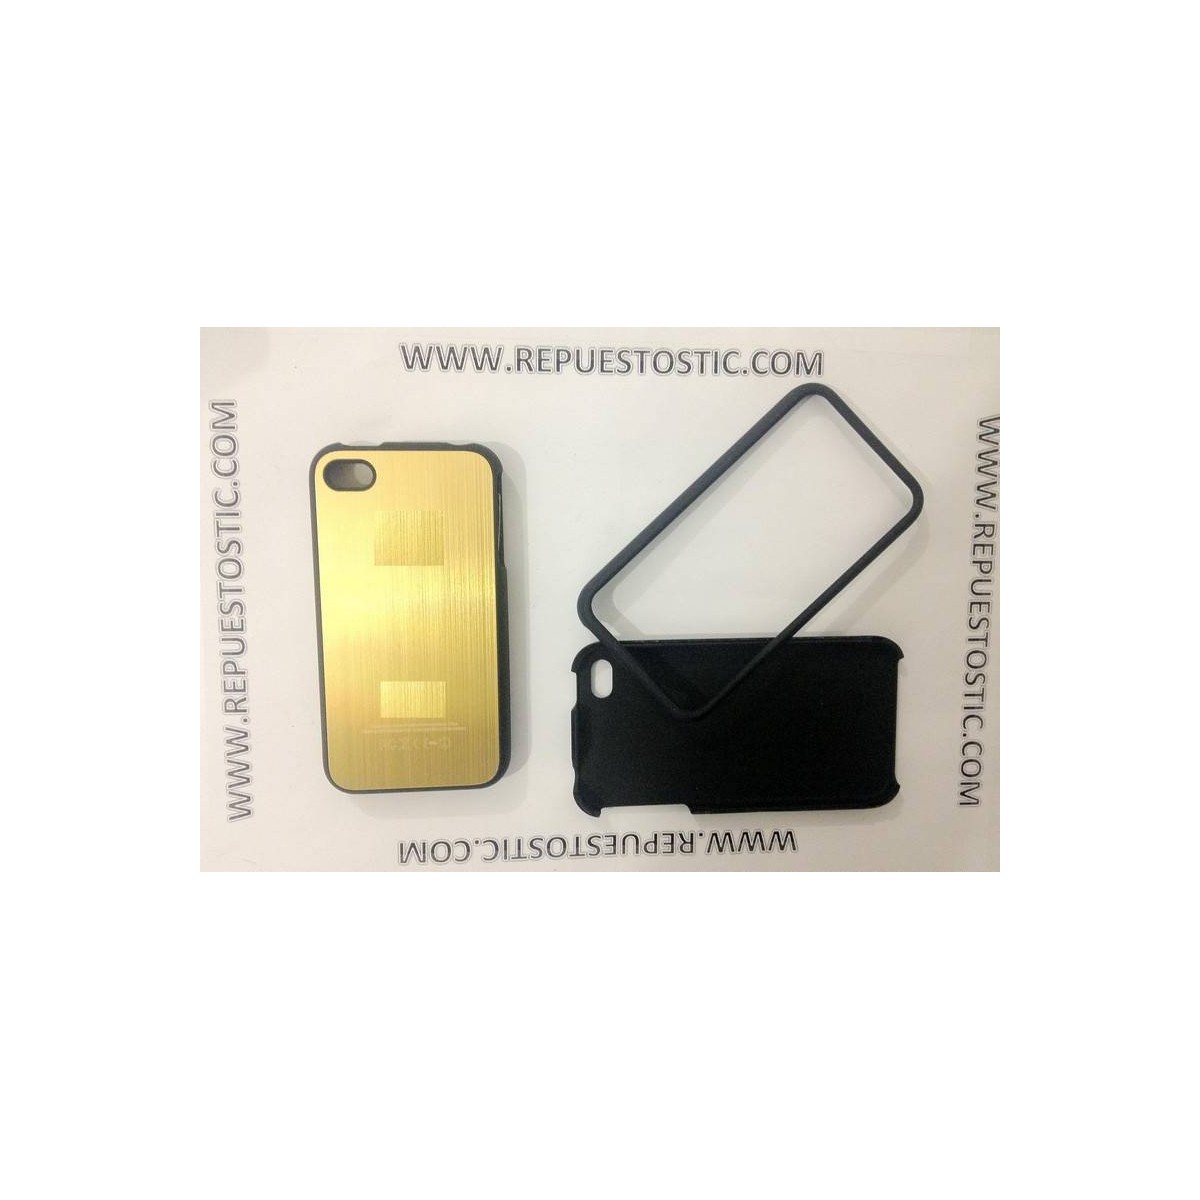 Funda iPhone 4G/S de 2 partes, de metal, cor ouro